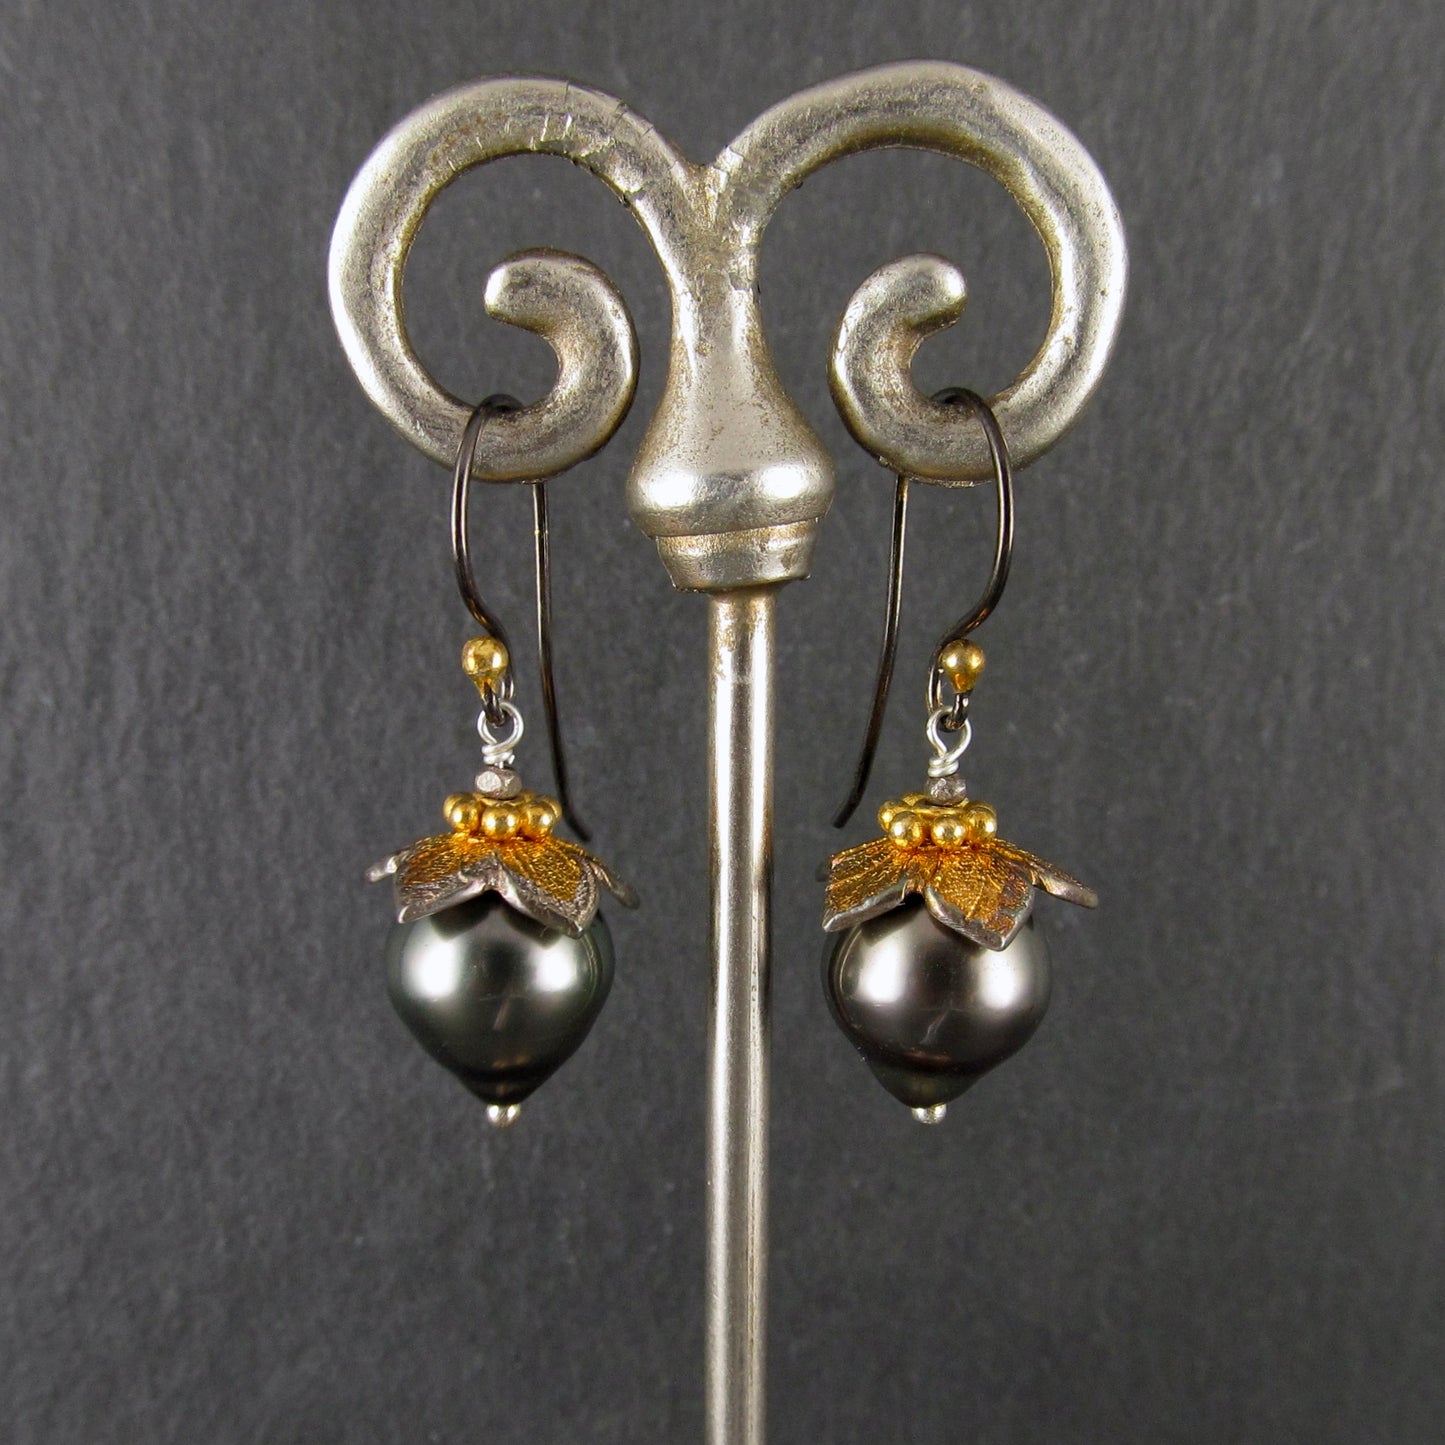 Tahitian pearl flower bud earrings in fine silver and 22k gold